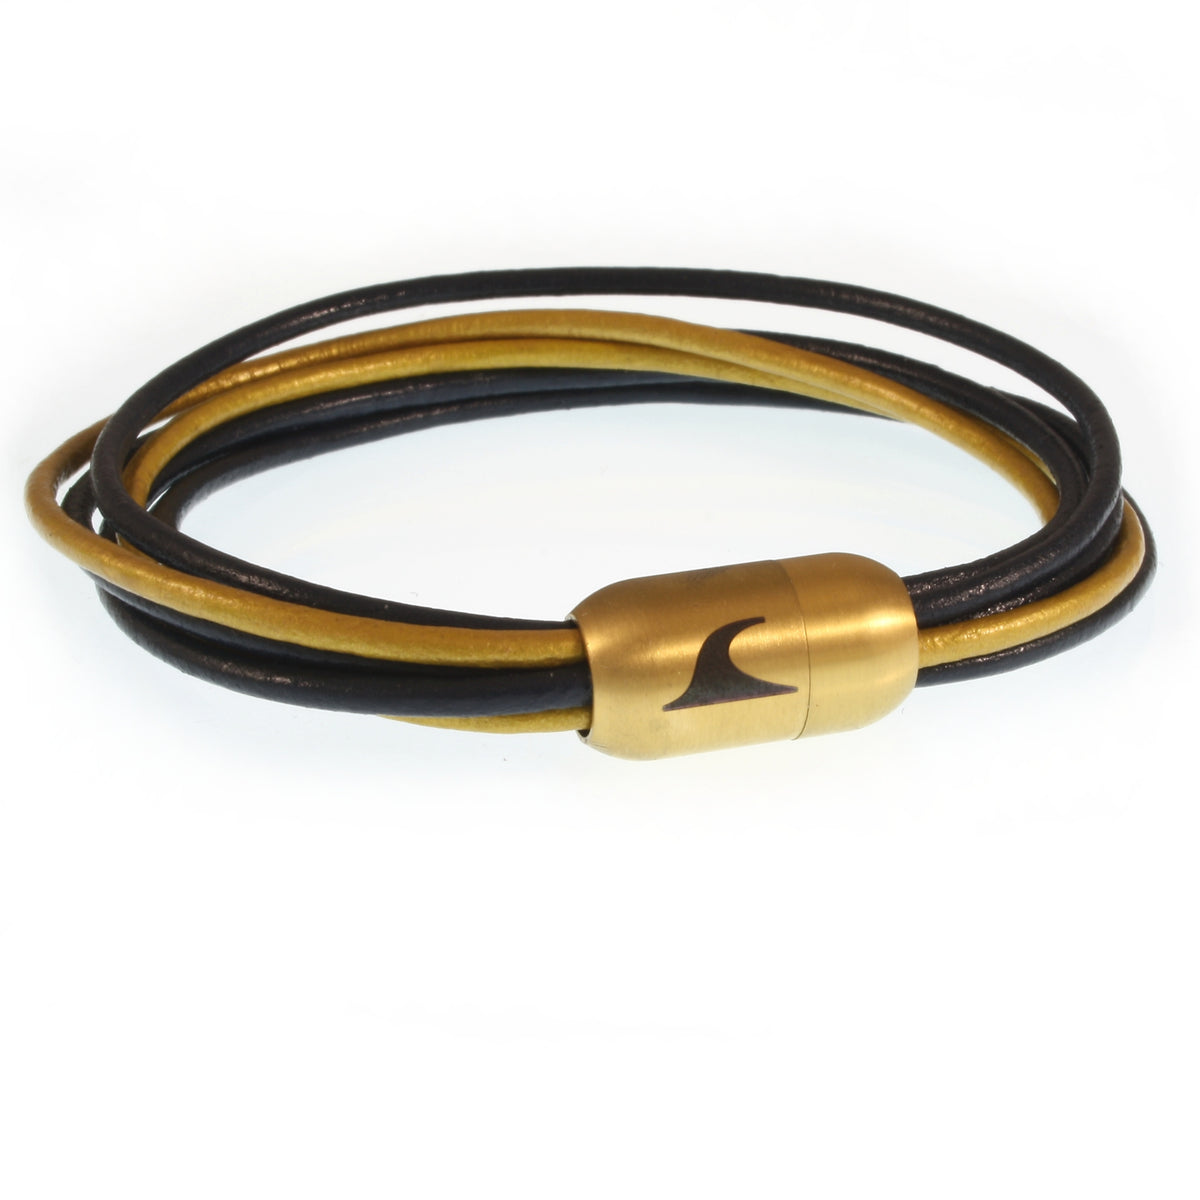 Damen-Leder-armband-fem-marine-gold-Edelstahlverschluss-vorn-wavepirate-shop-r